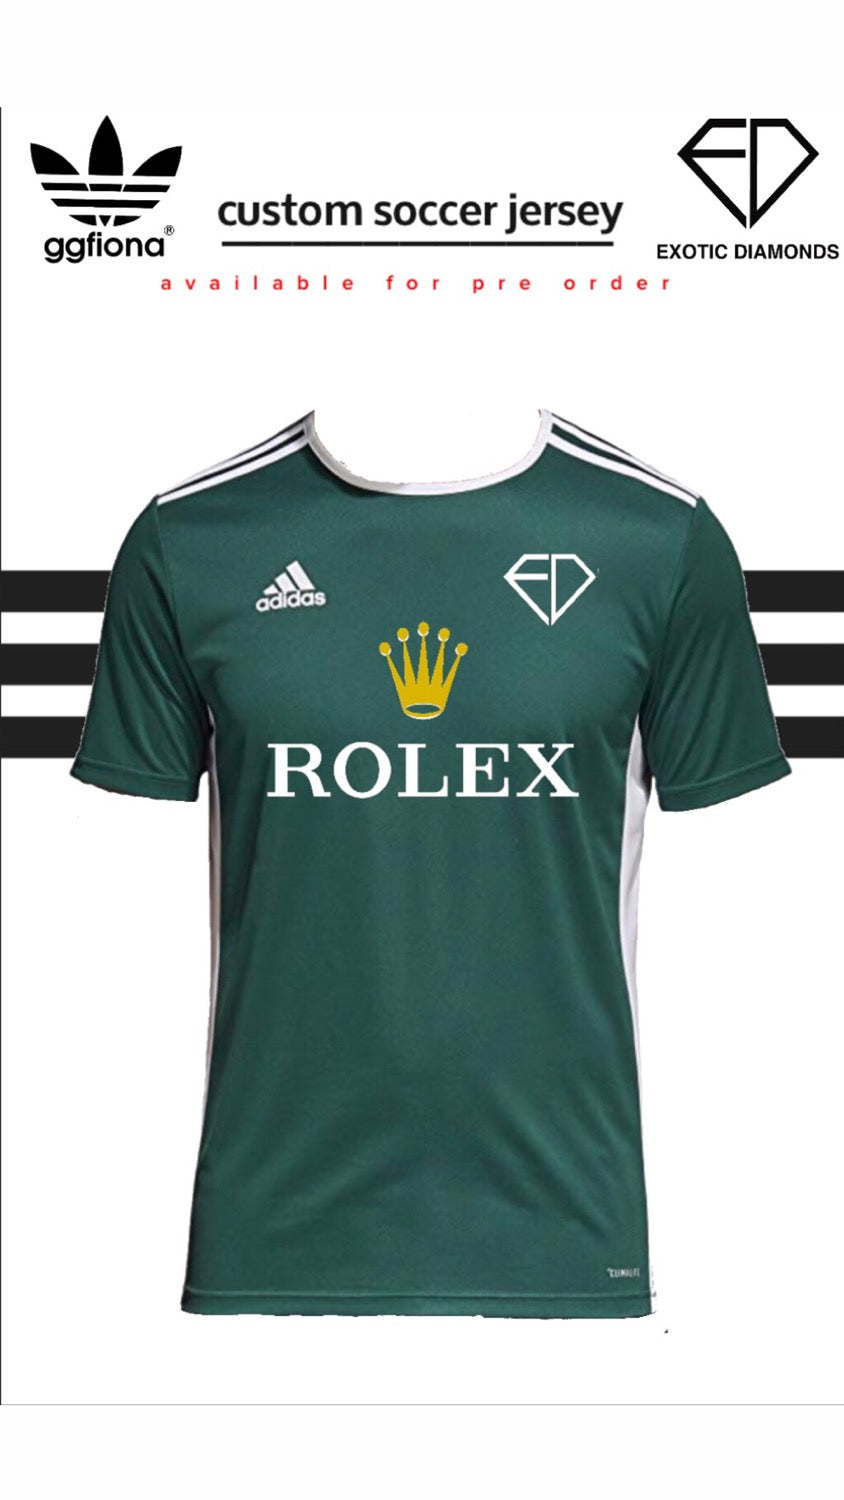 The Rolex custom soccer jersey